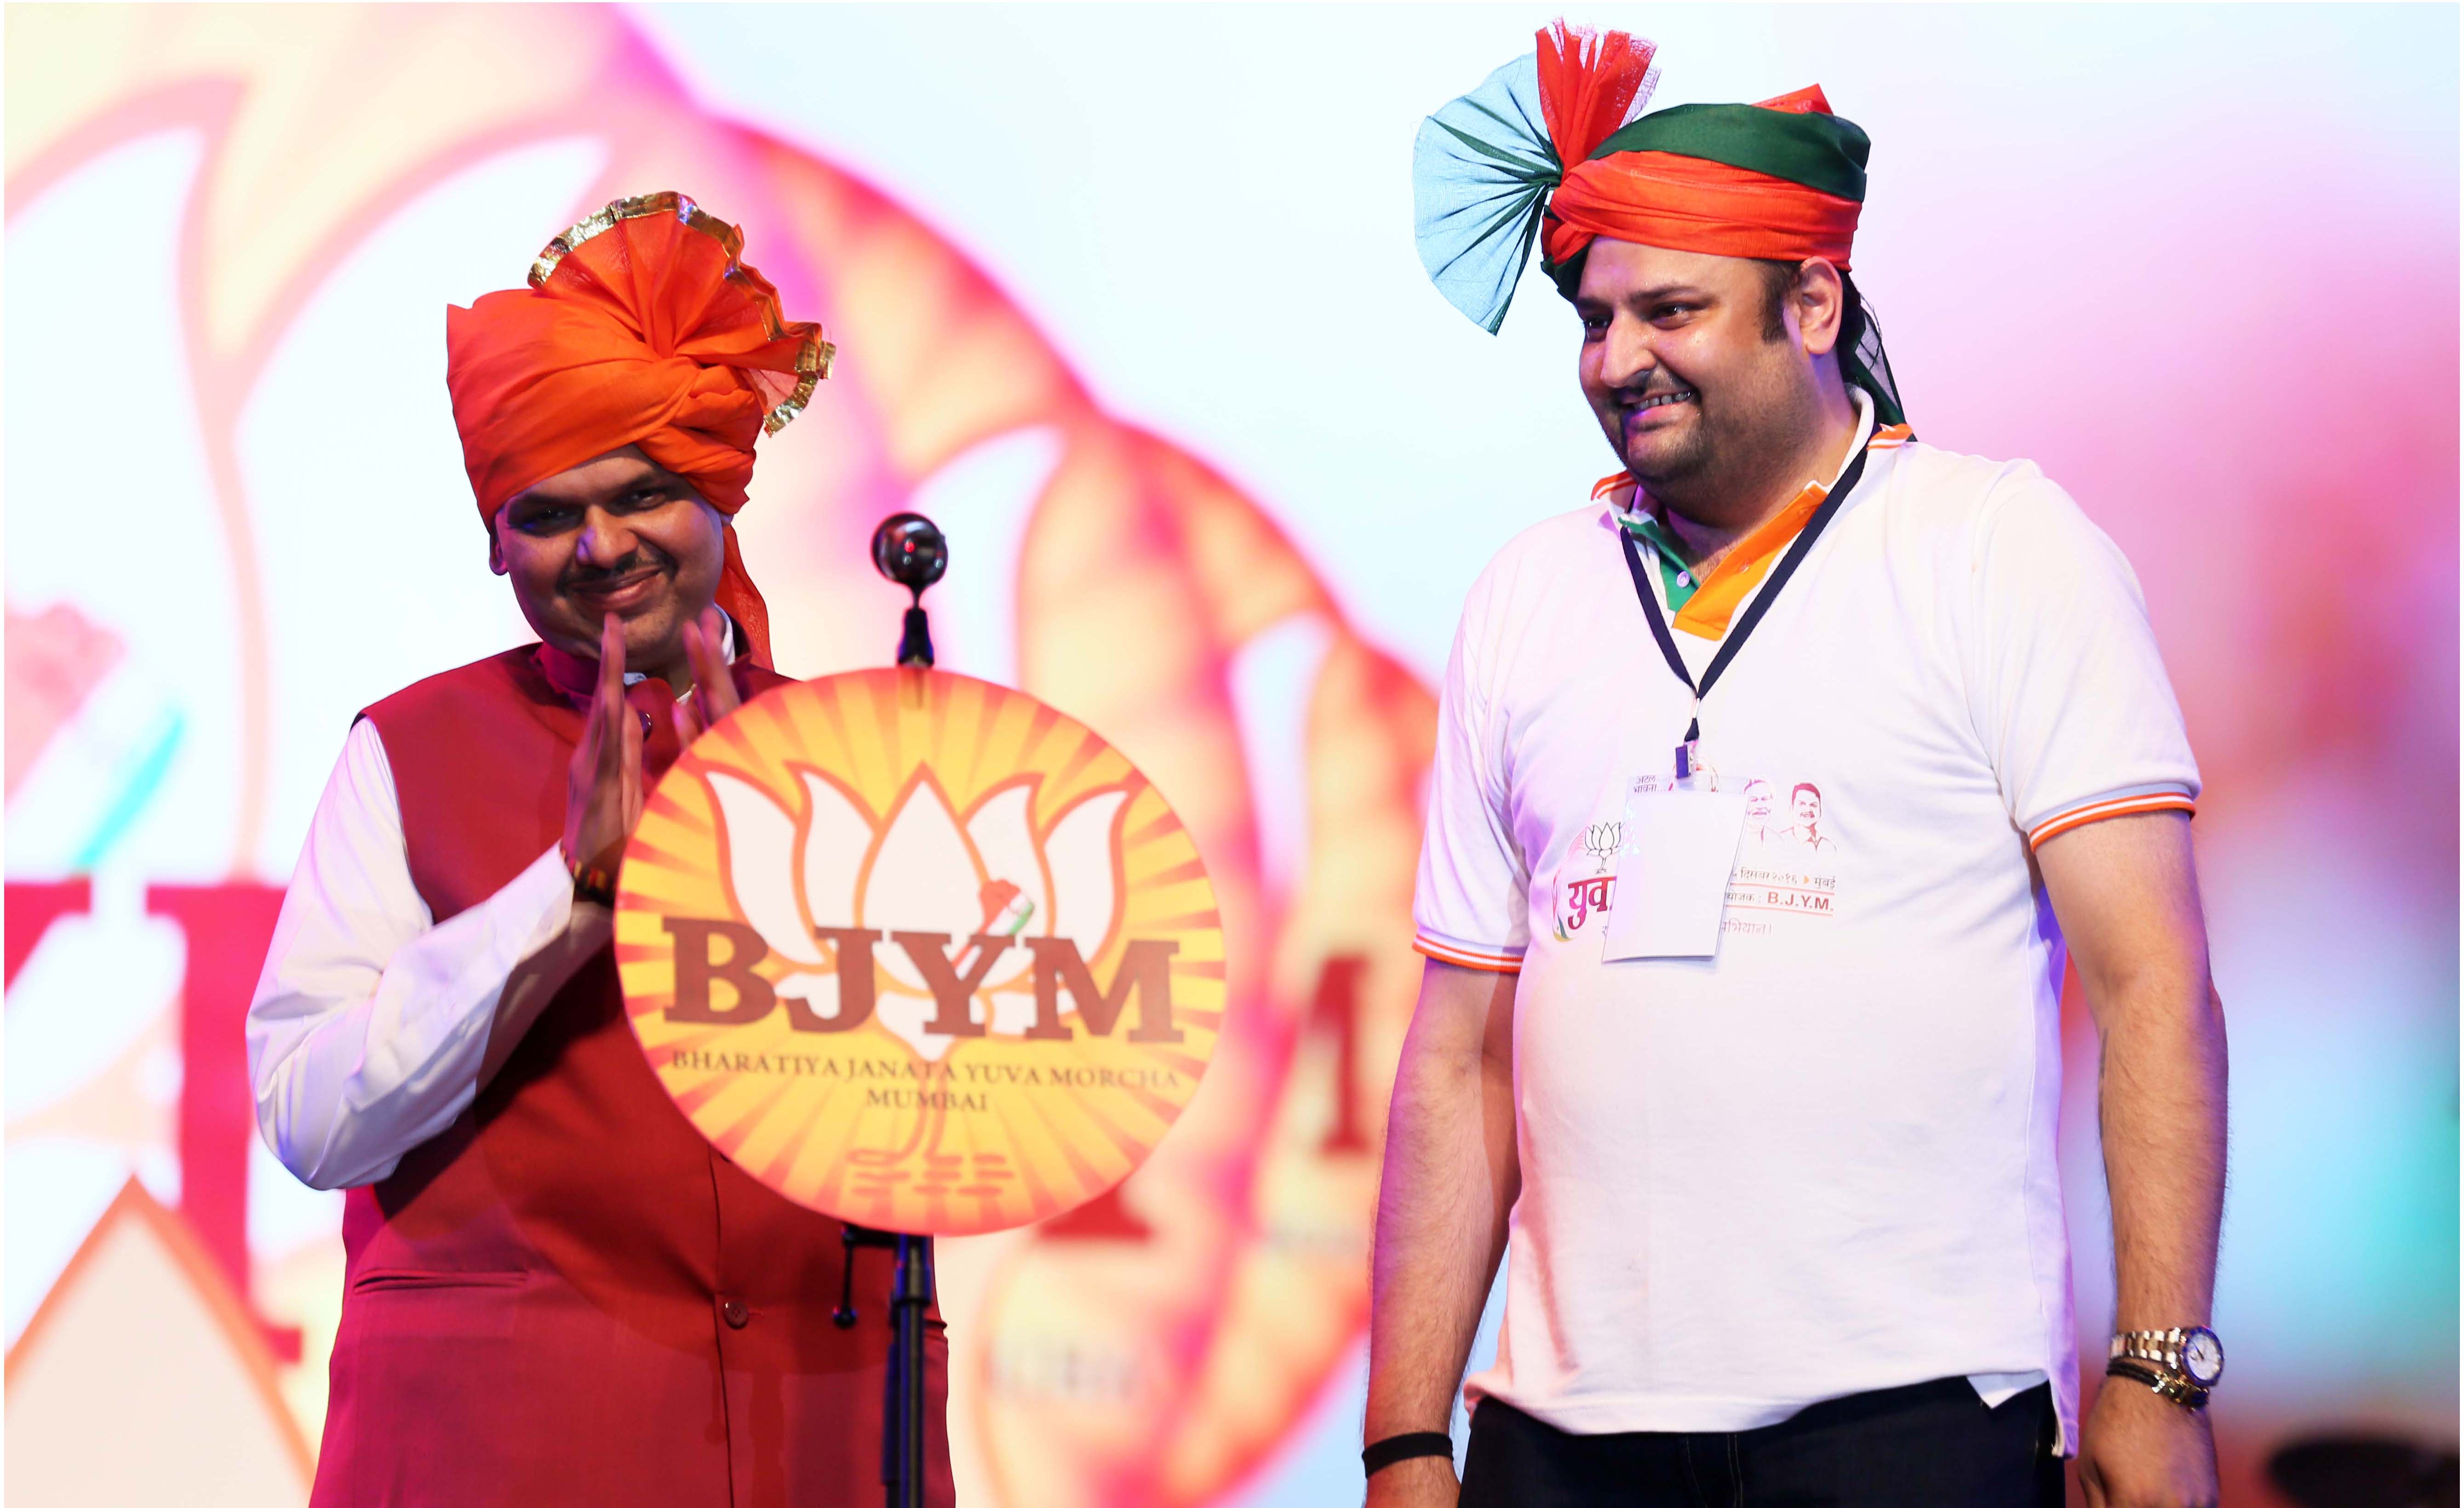  CM. Devendra Fadnavis & Mohit Kamboj (Mumbai President, B.J.Y.M.) at 'YUVA URJA' program